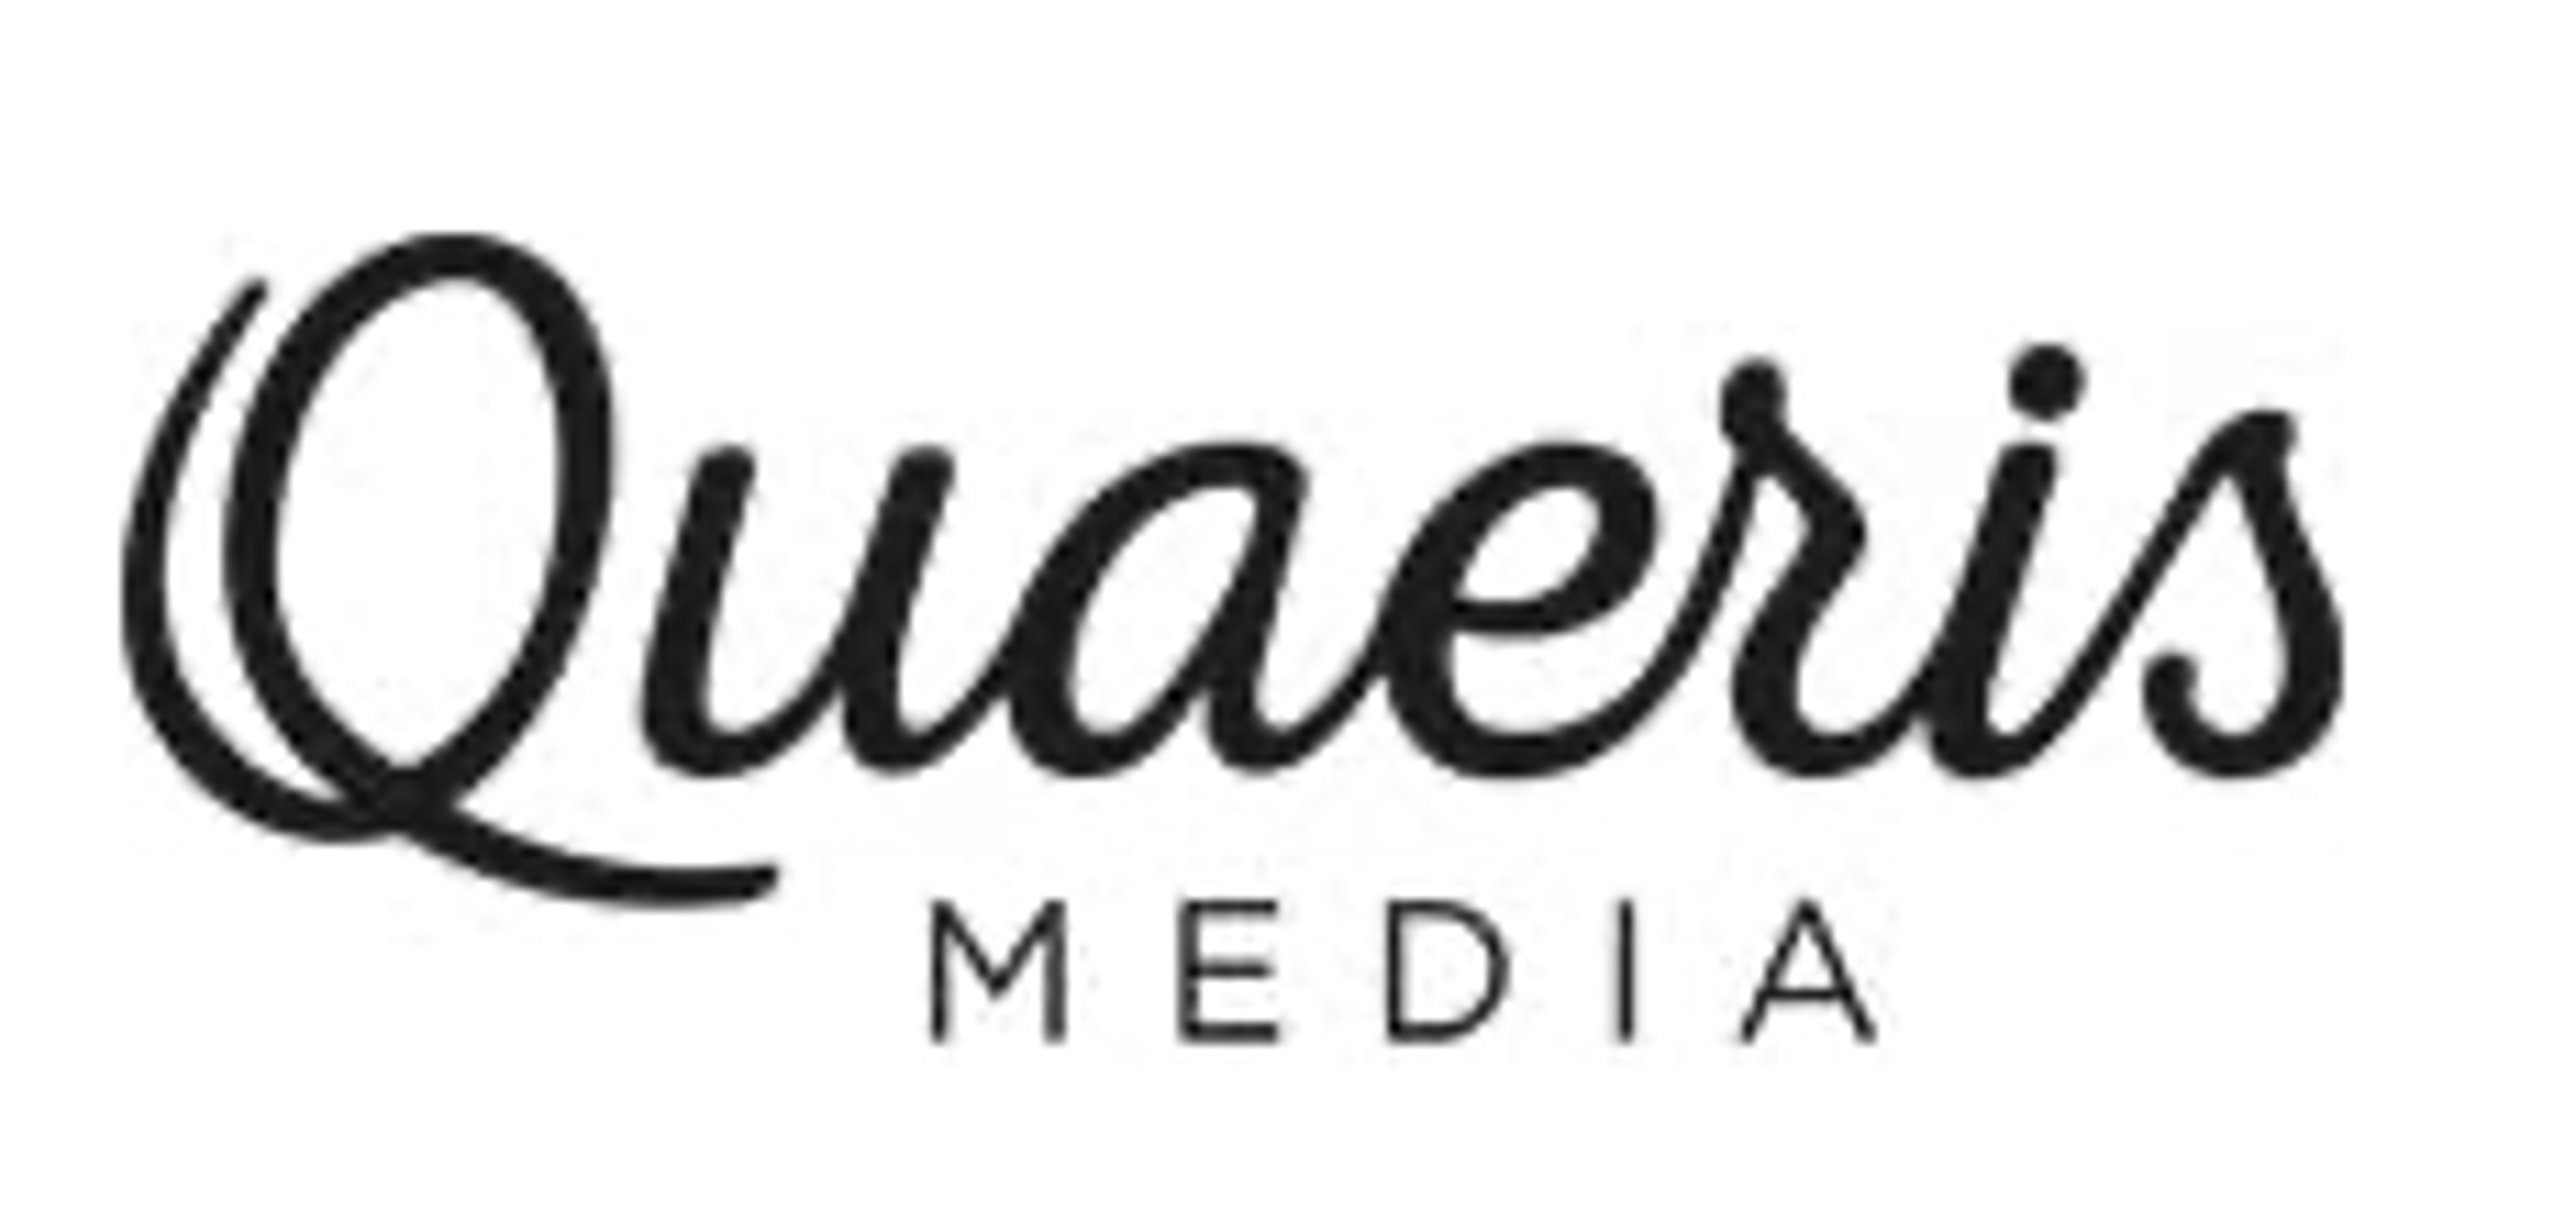 Trainews Media verkoopt Zeeuwse kranten aan Quaeris Media B.V.